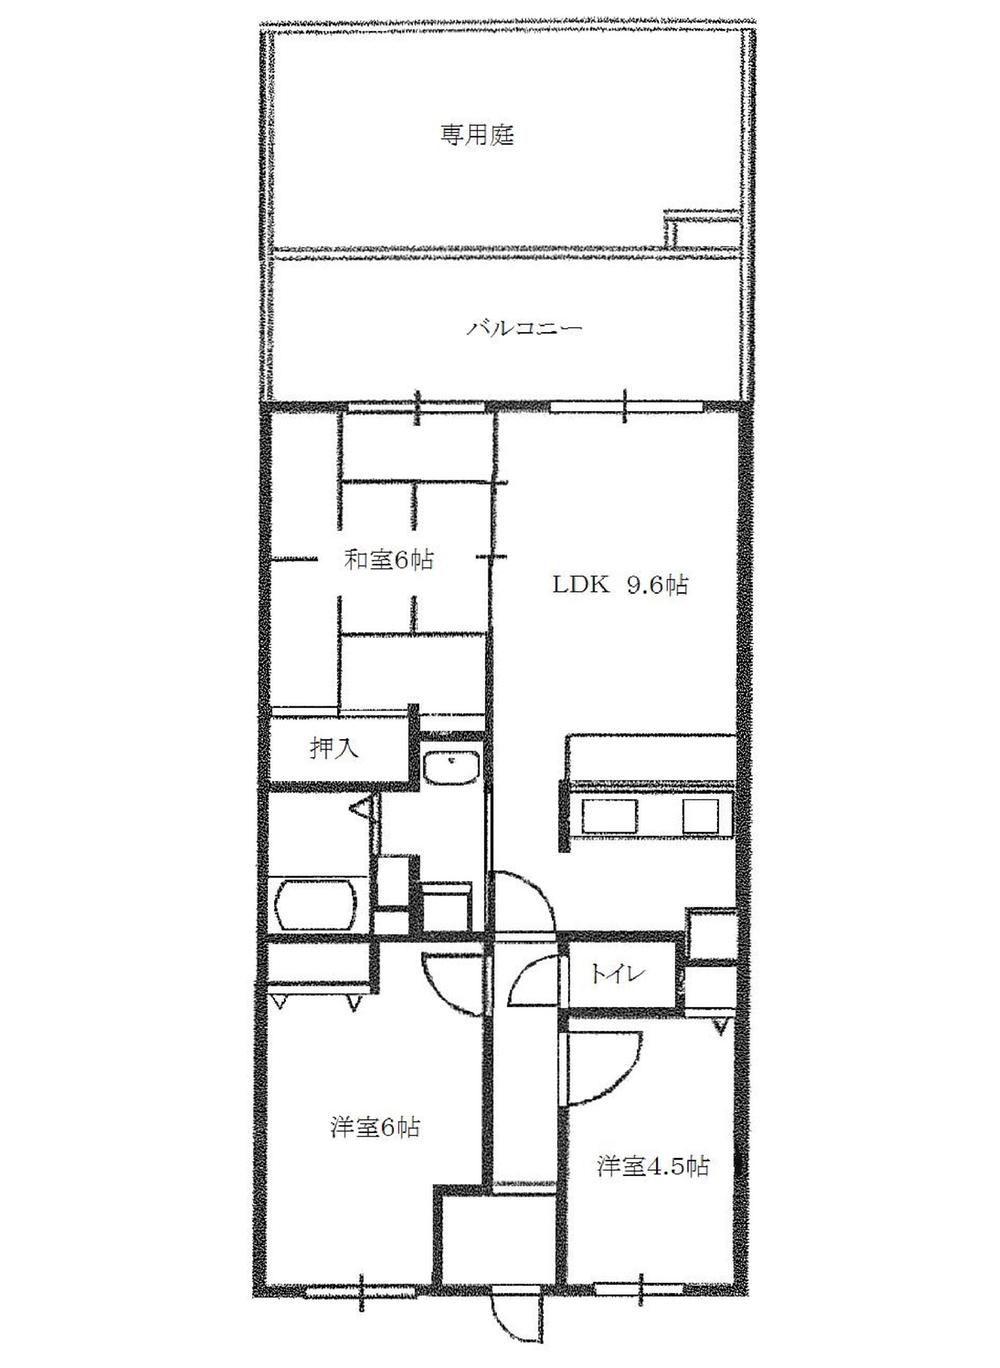 Floor plan. 3LDK, Price 9.7 million yen, Footprint 60.9 sq m , Balcony area 10.44 sq m   ☆ Day good private garden!